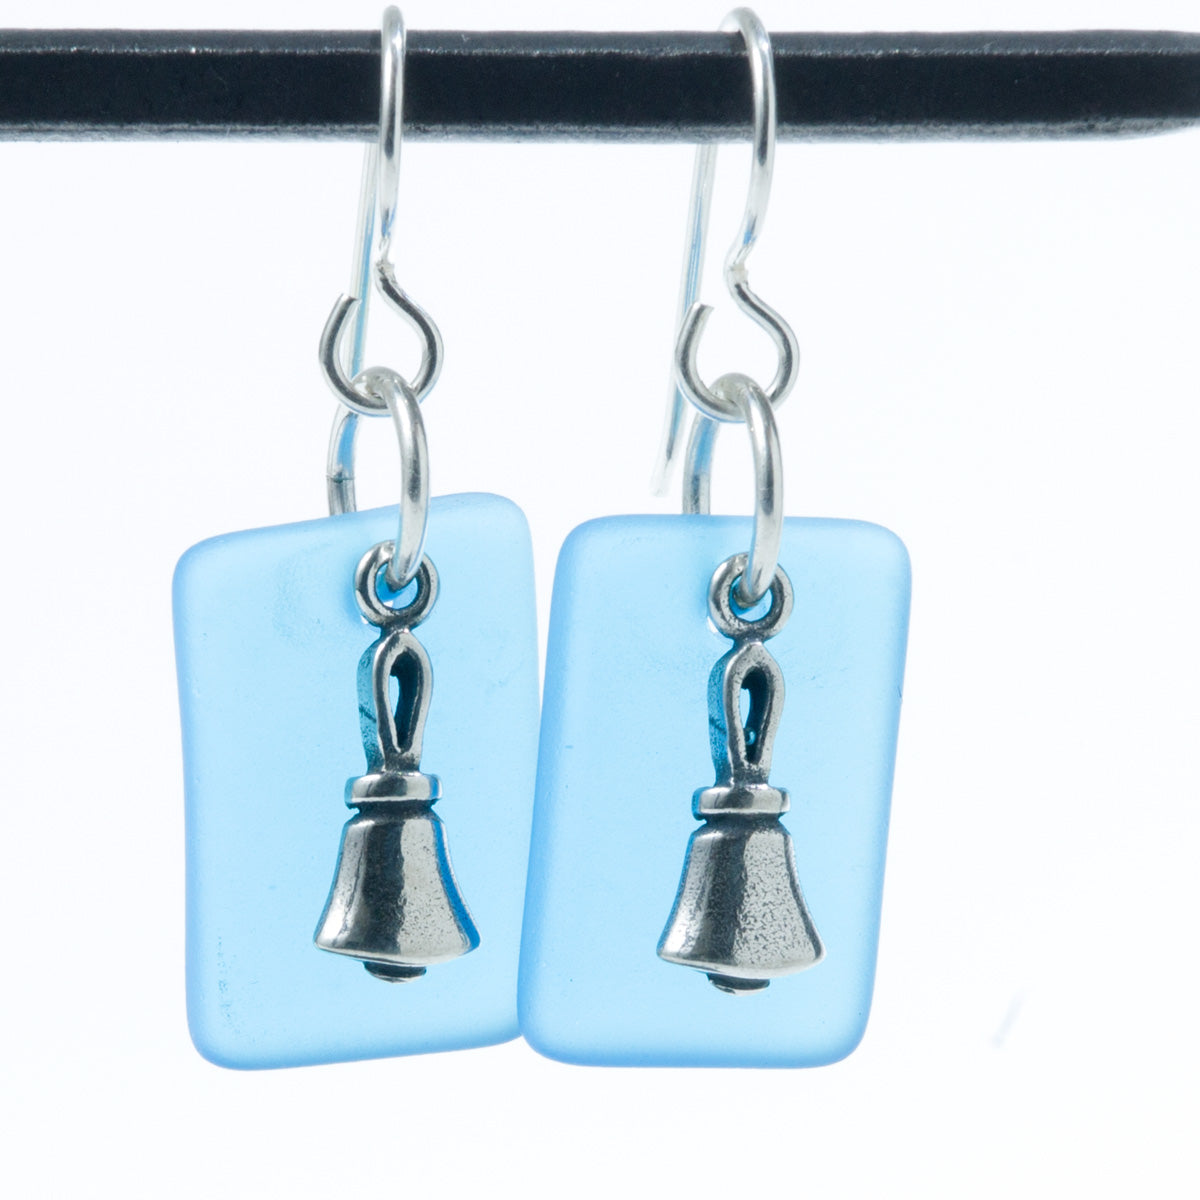 Seaglass Charm Earrings - handbell, sterling silver